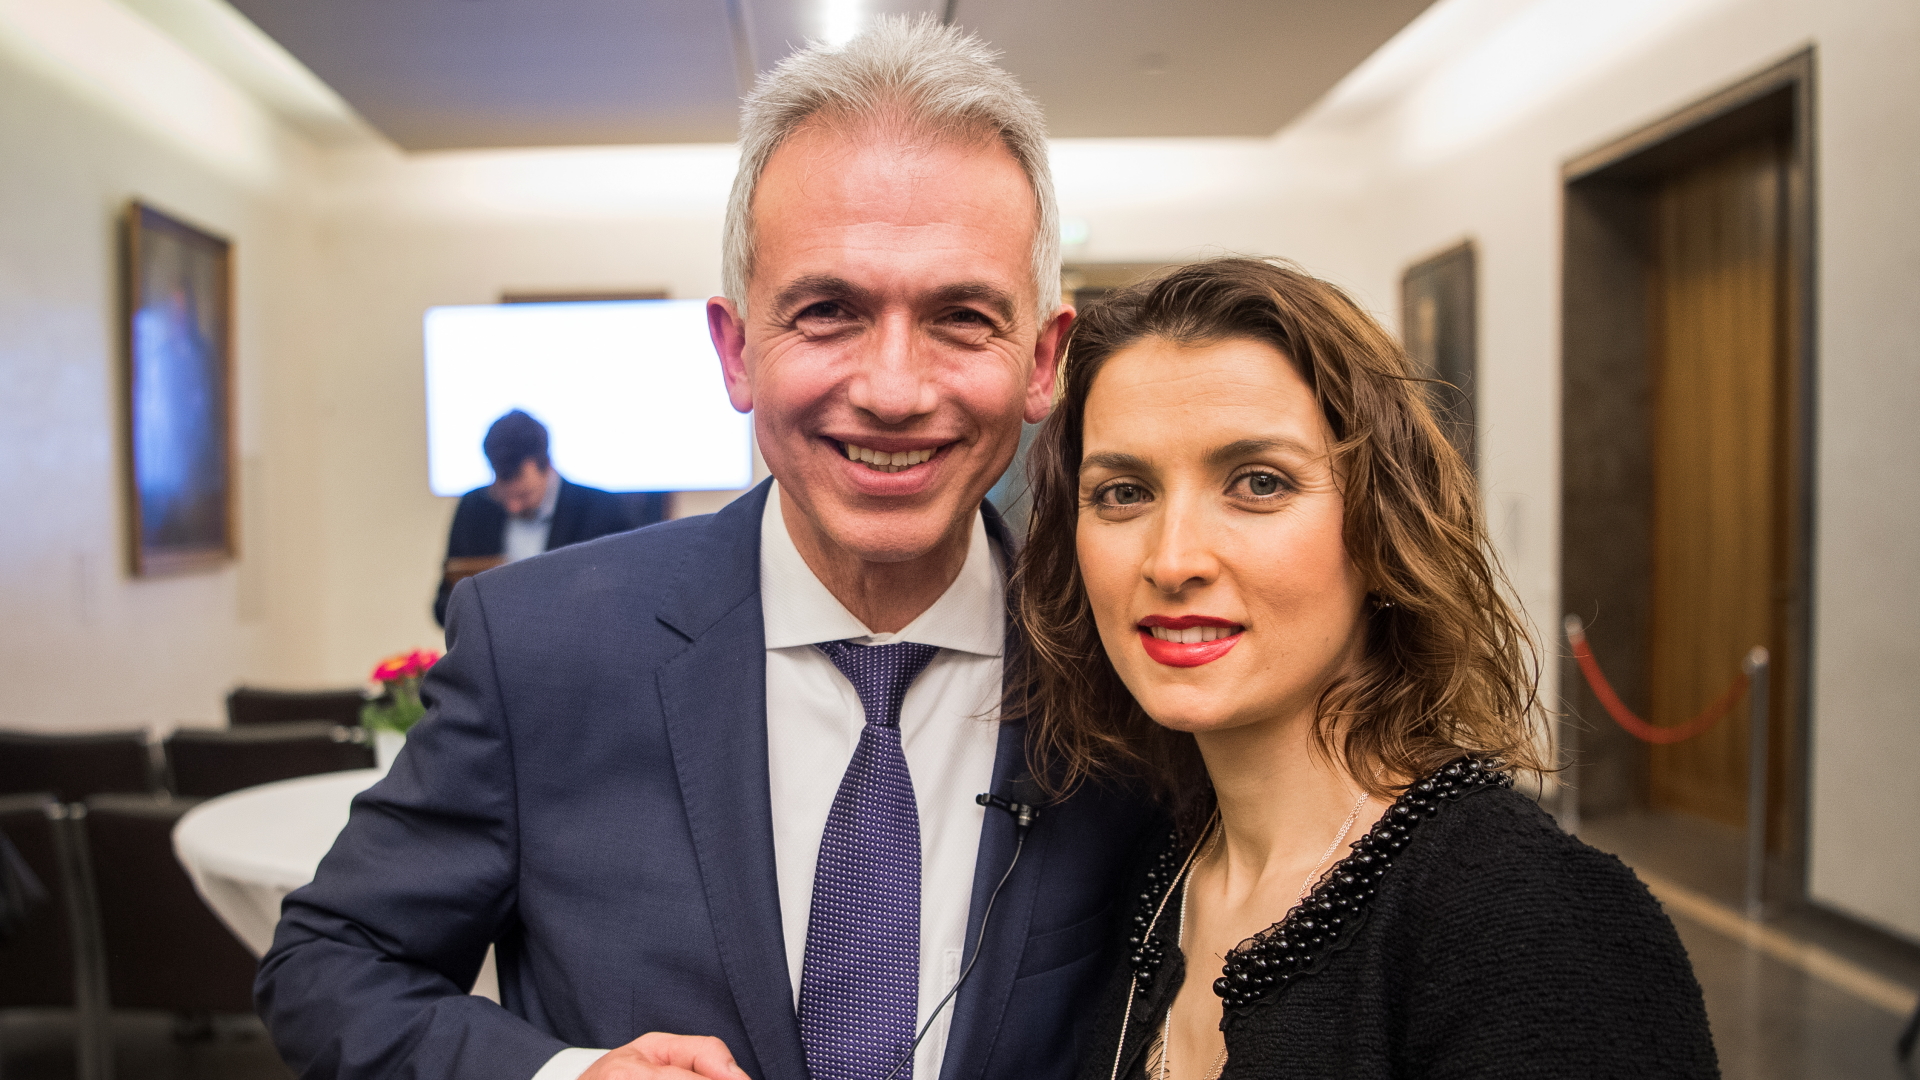 Frankfurts Oberbürgermeister Feldmann mit seiner Ehefrau. | dpa